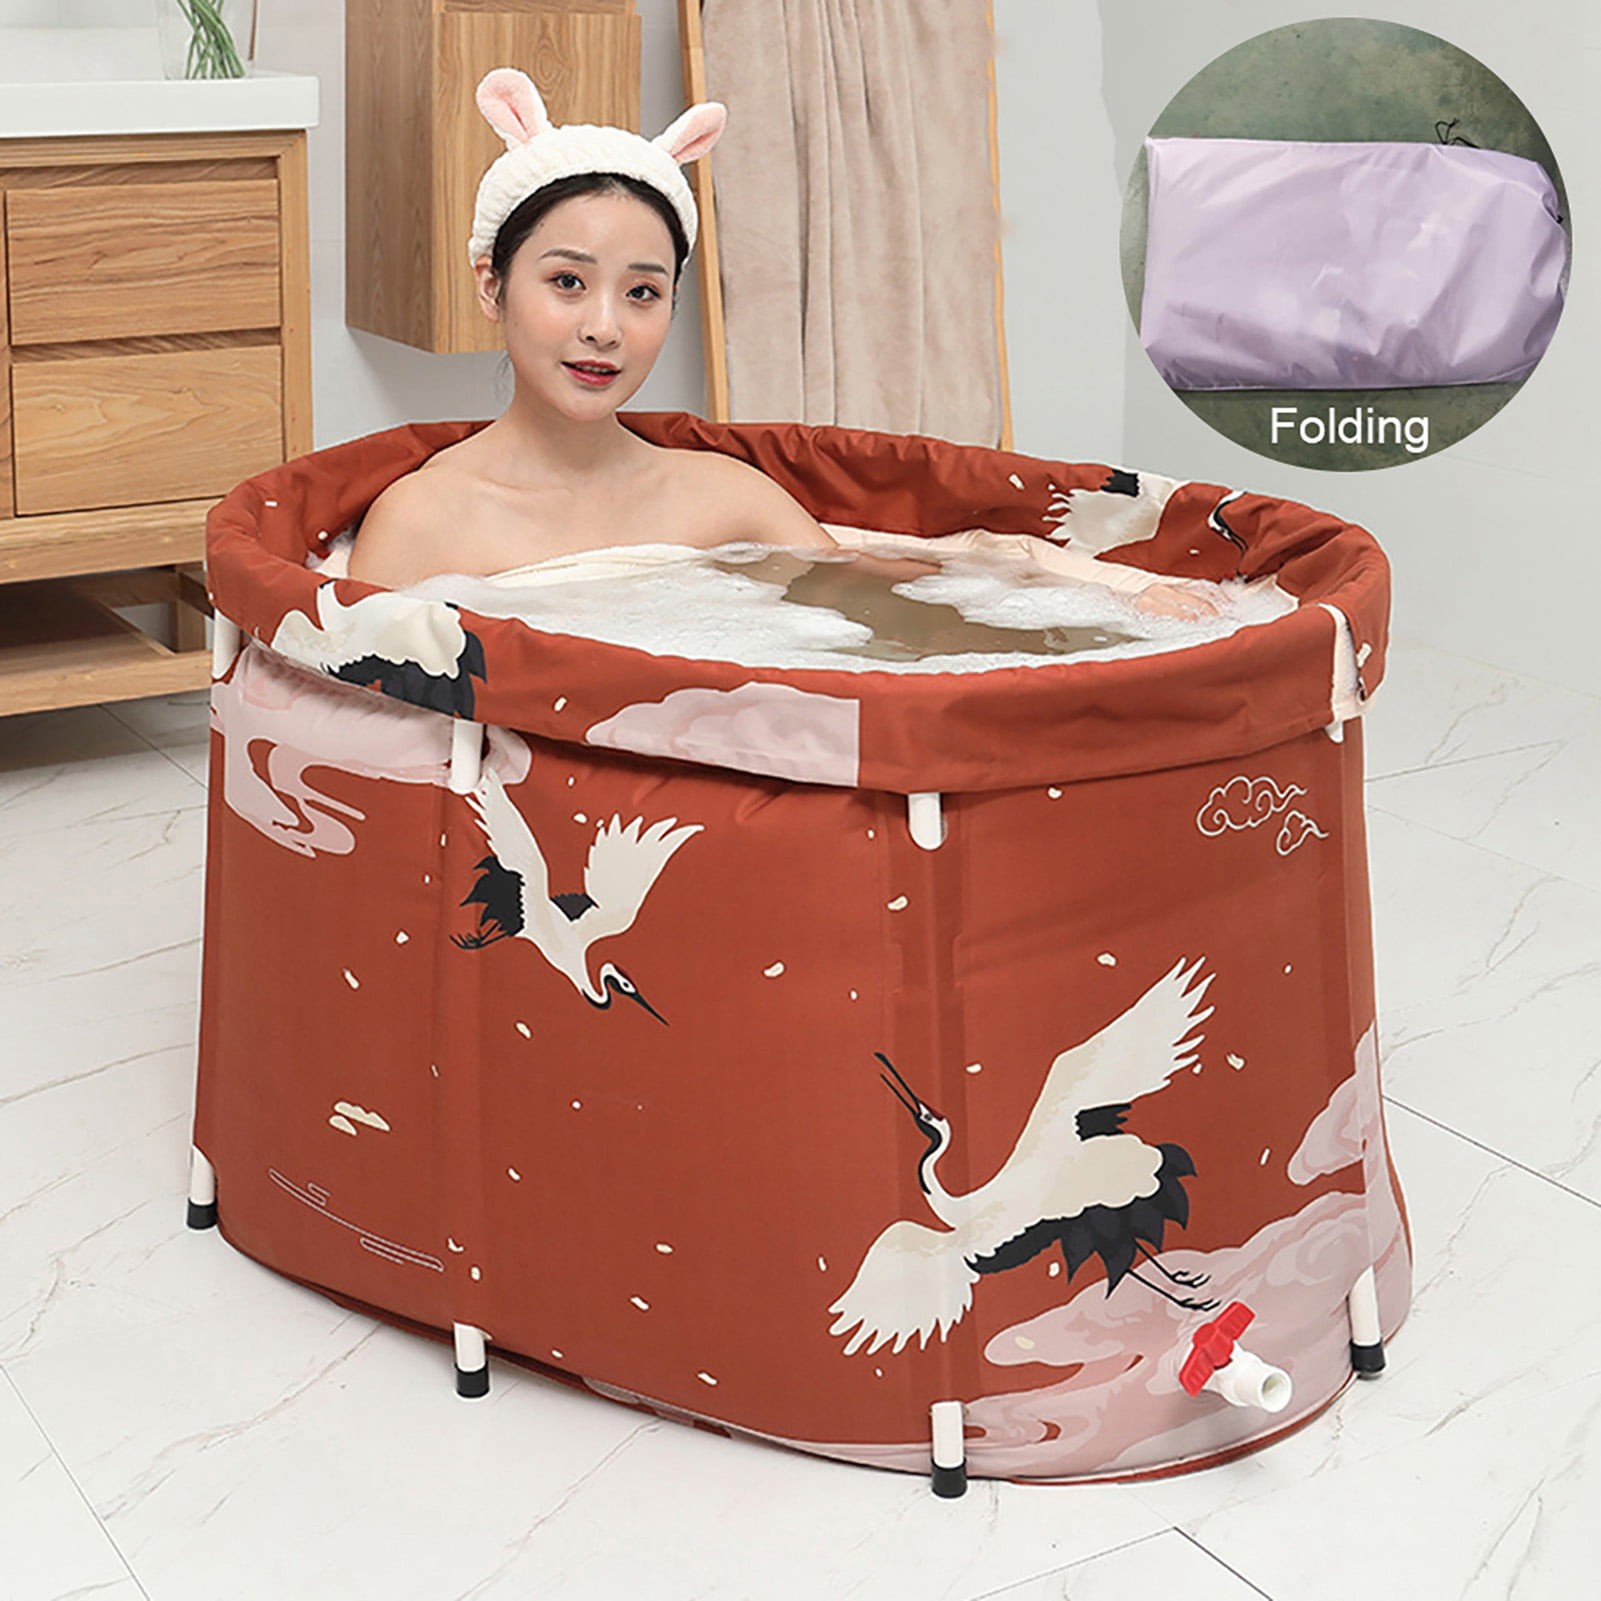 Folding bathtub set Portable Bathtub Thick Plastic Folding Bath Tub for